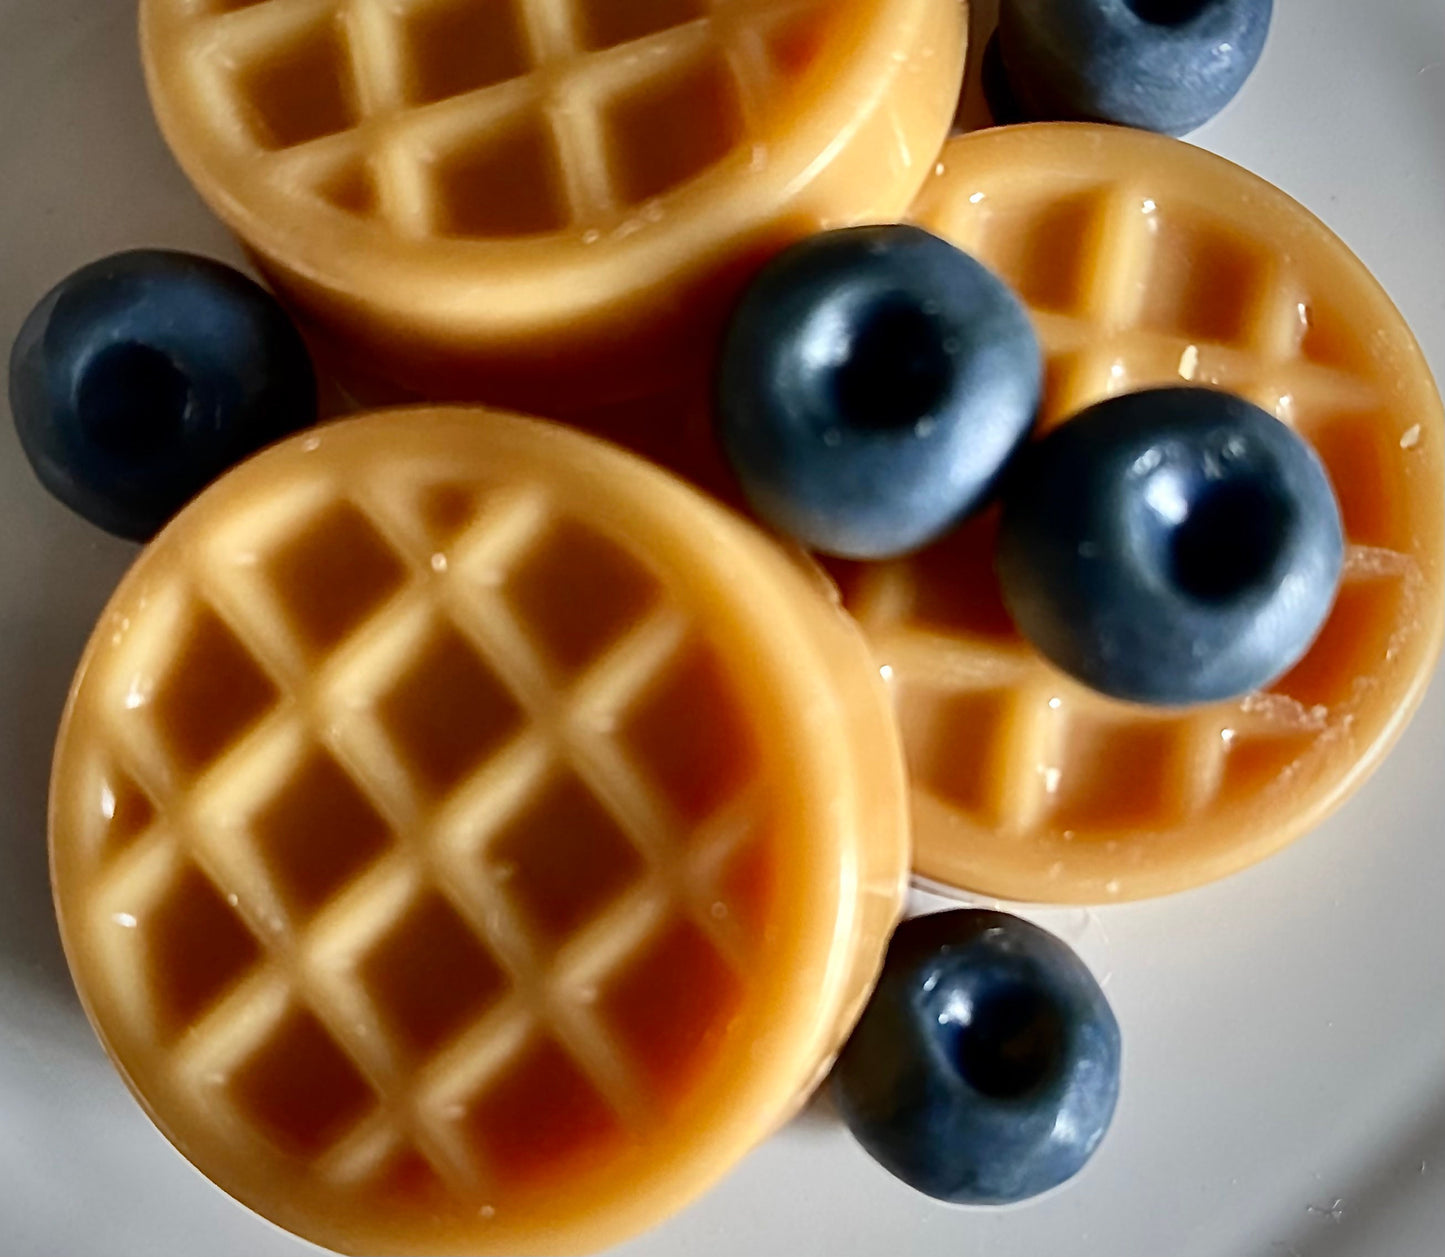 Blueberry and Waffle Wax Melts / Food Like Wax Melts – Sugar and Spice  Custom Creations, LLC